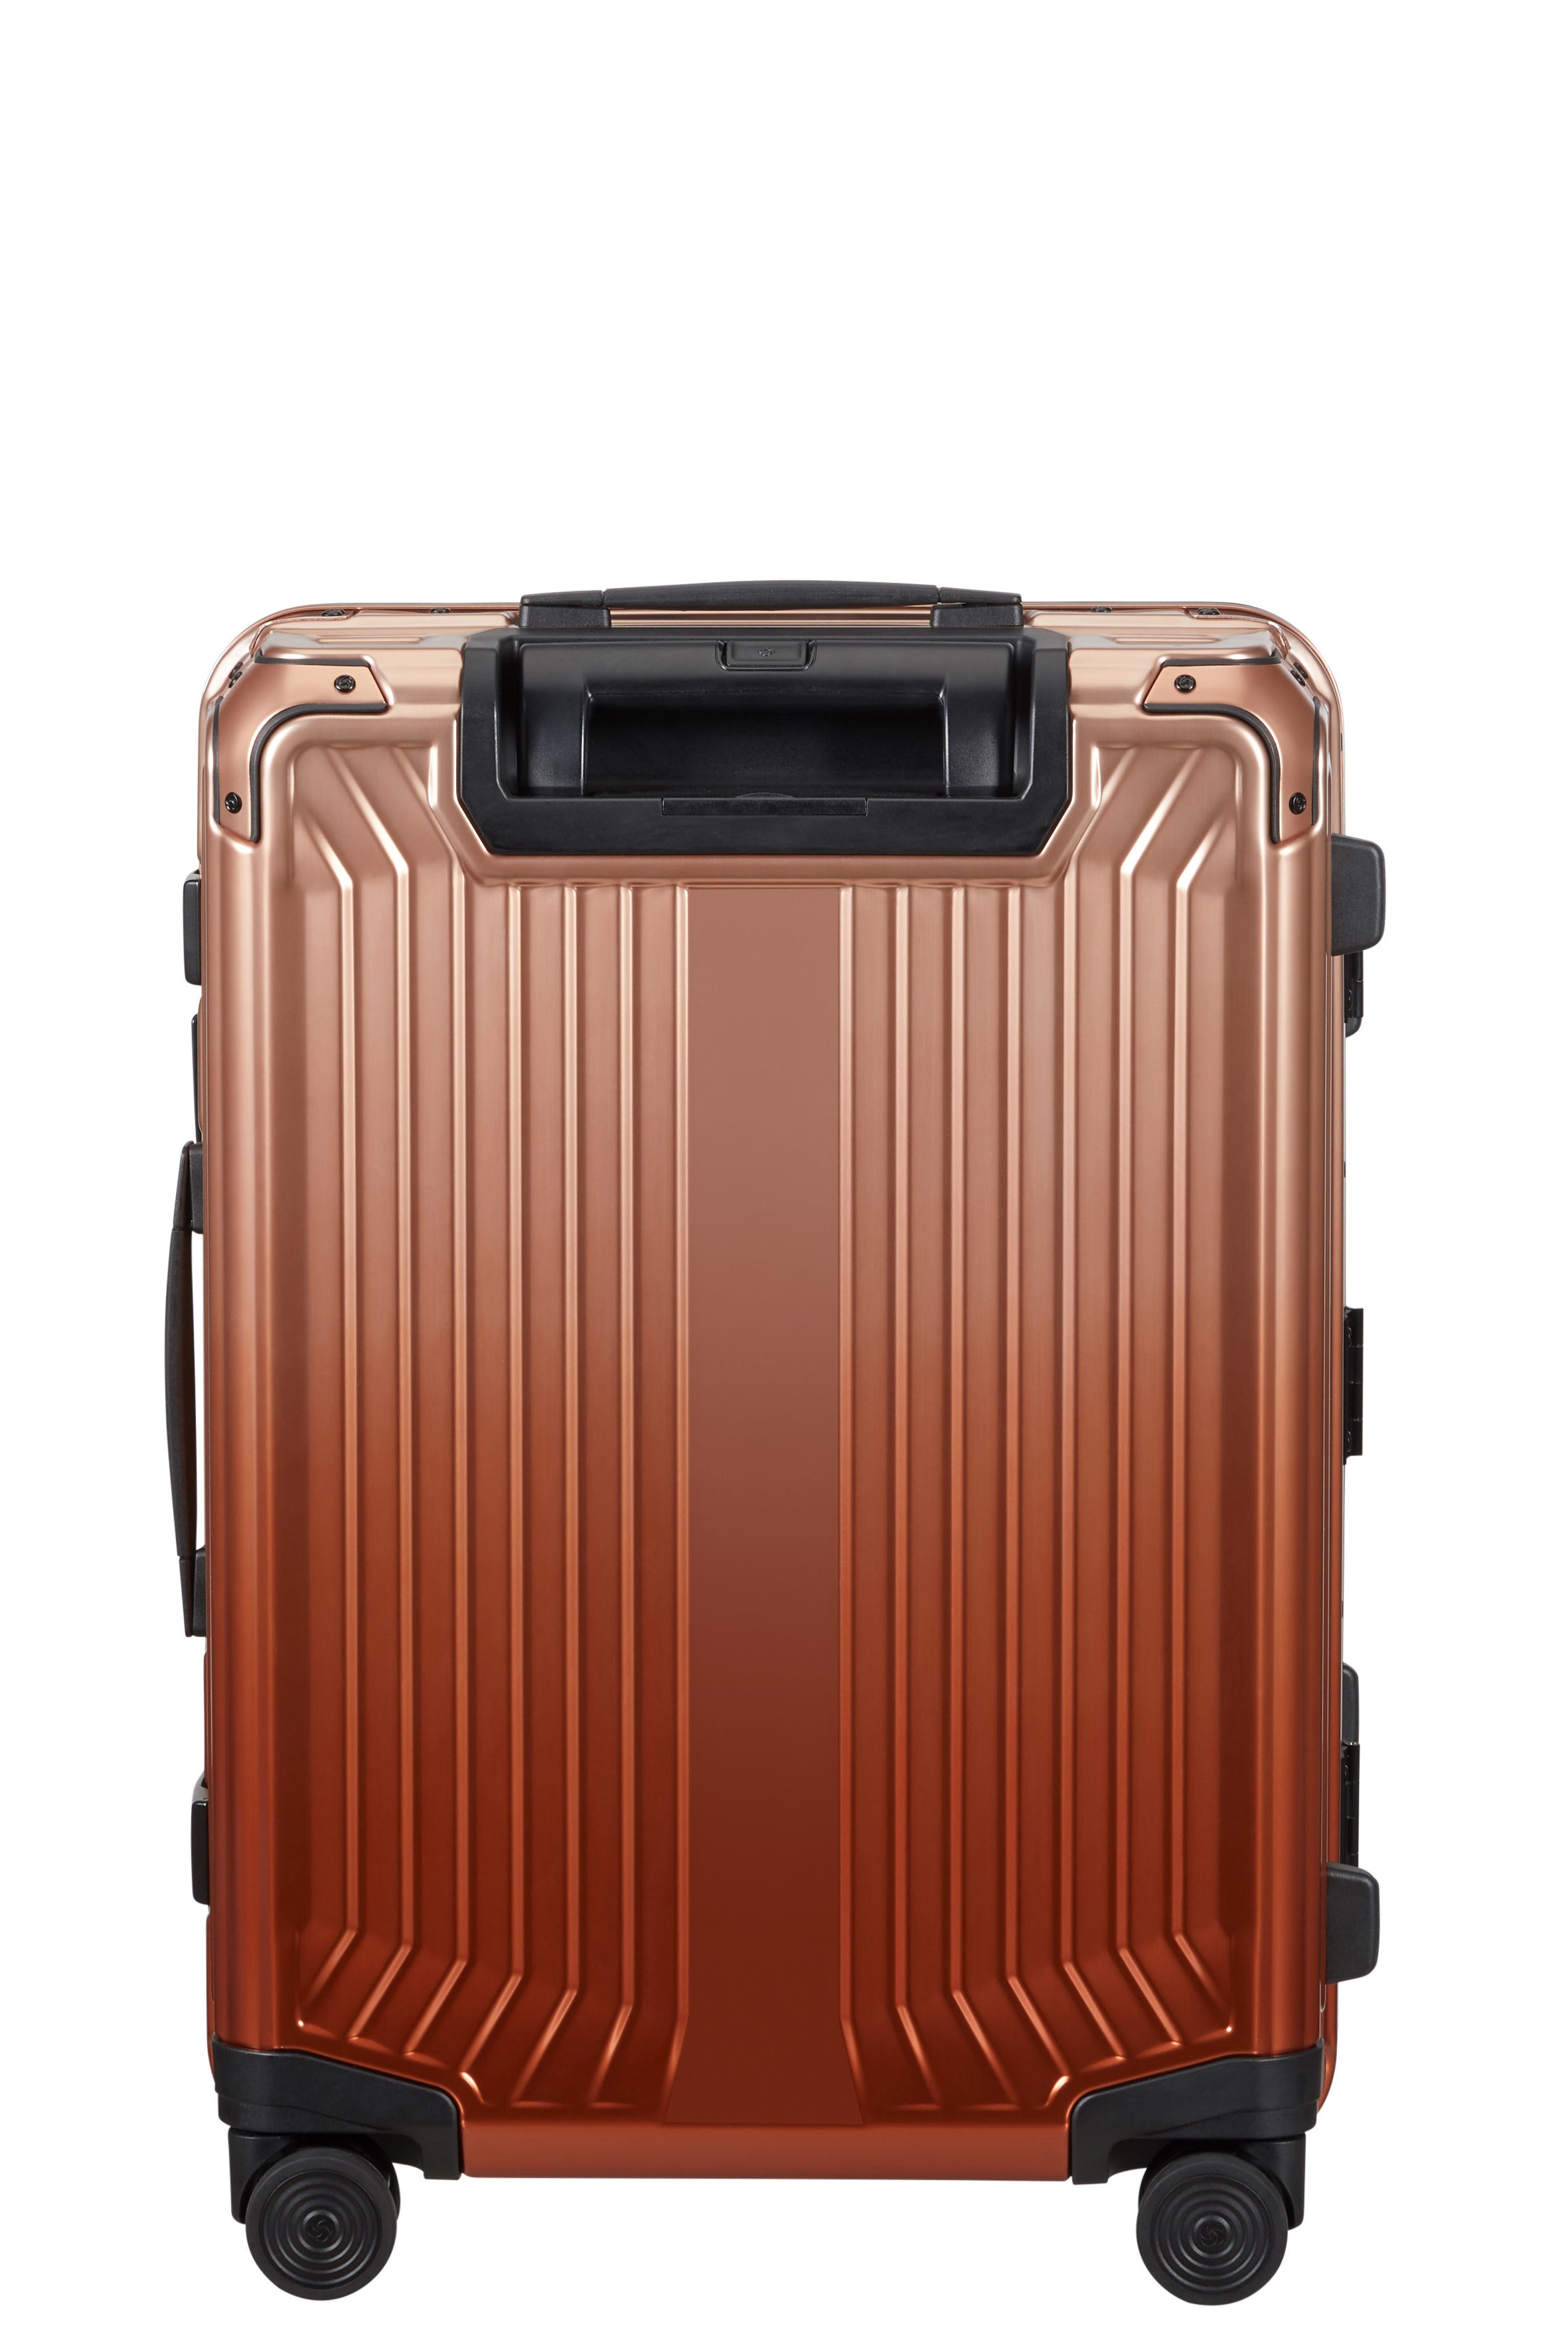 Samsonite - Lite Box ALU 55cm Small 4 Wheel Hard Suitcase - Gradient Copper-3